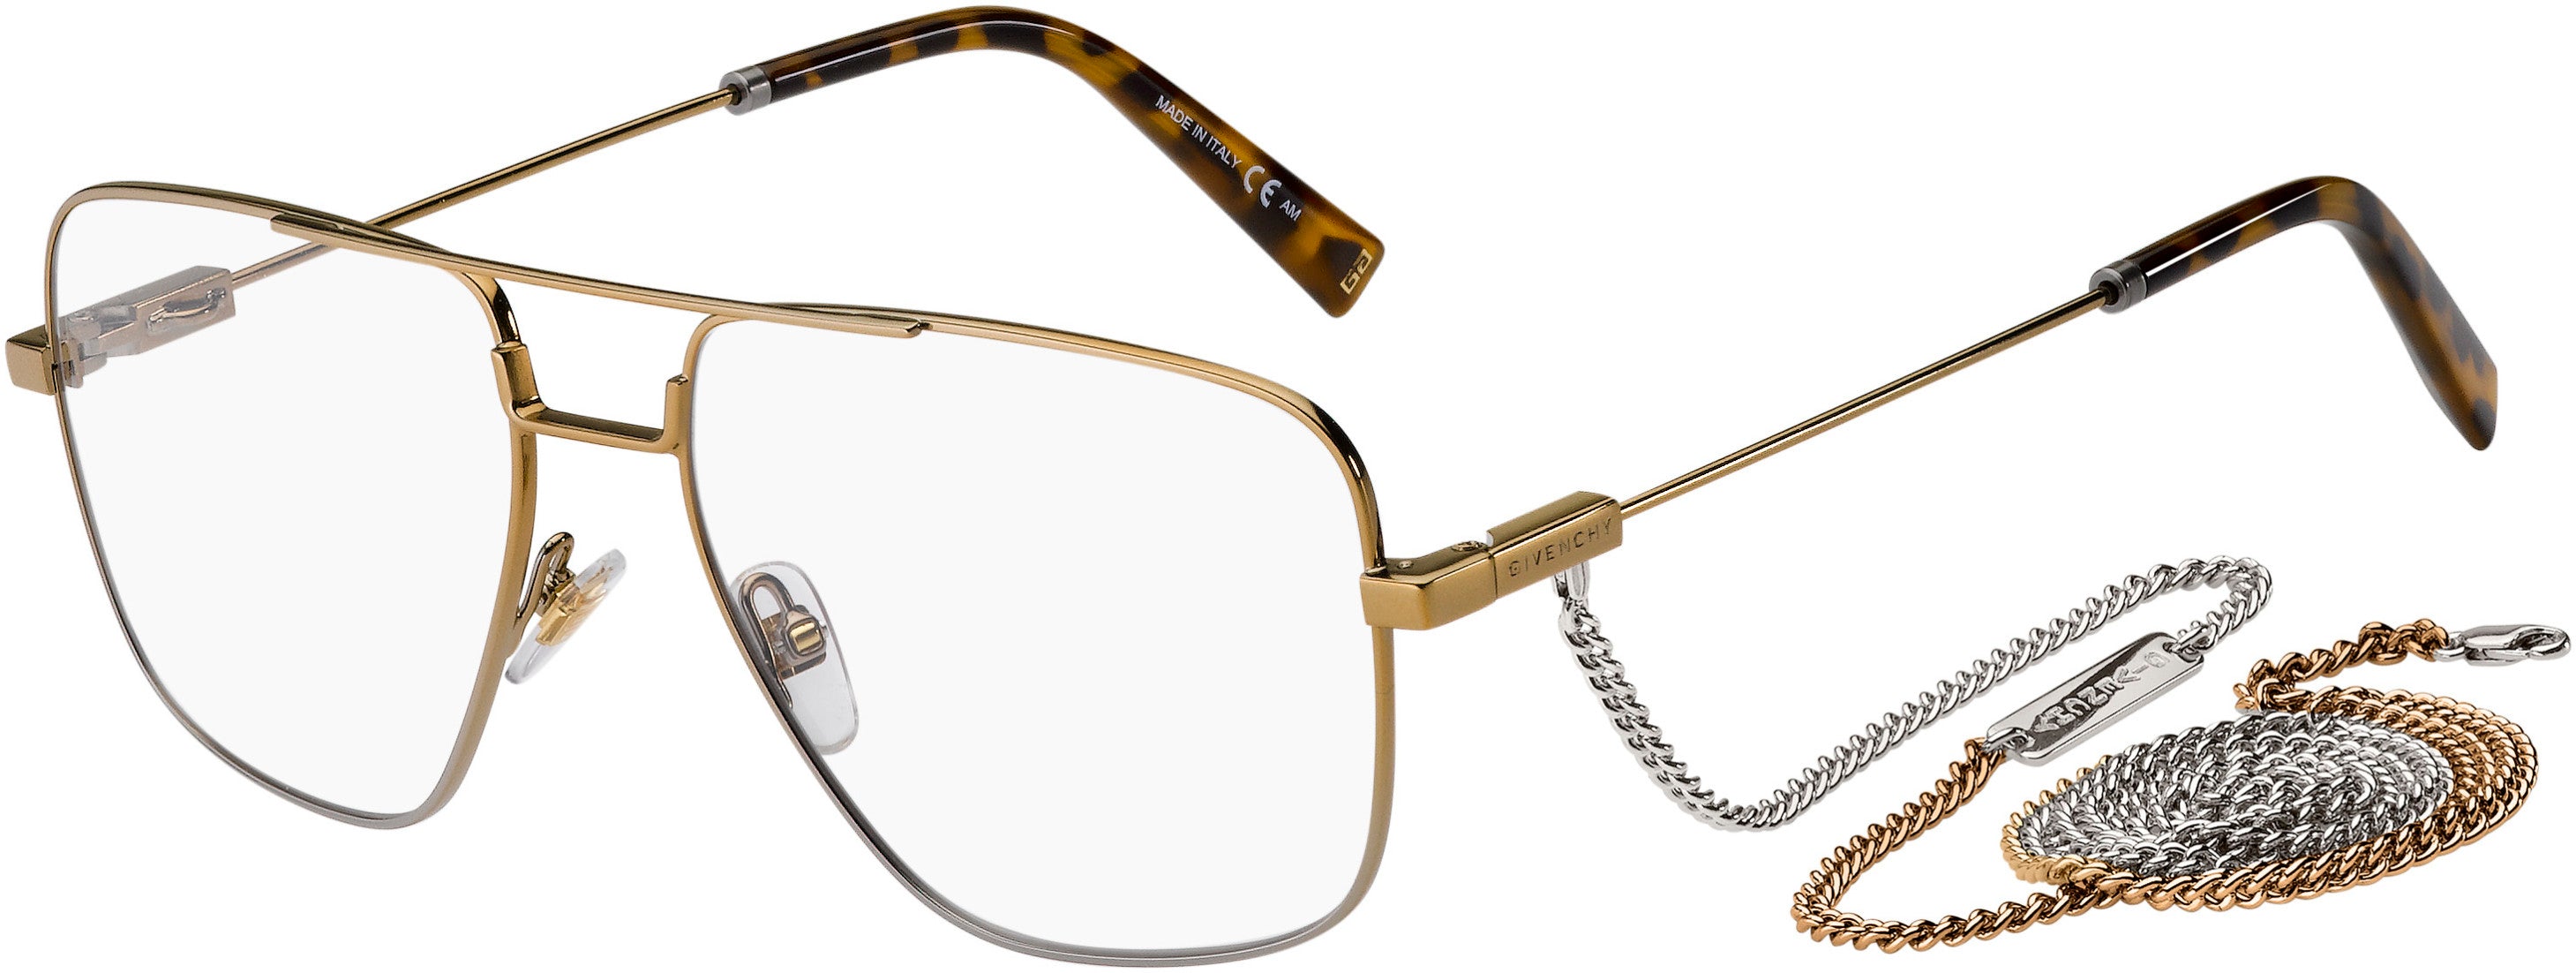  Givenchy 0134 Square Eyeglasses 0NCJ-0NCJ  Brown Ruthenium (00 Demo Lens)